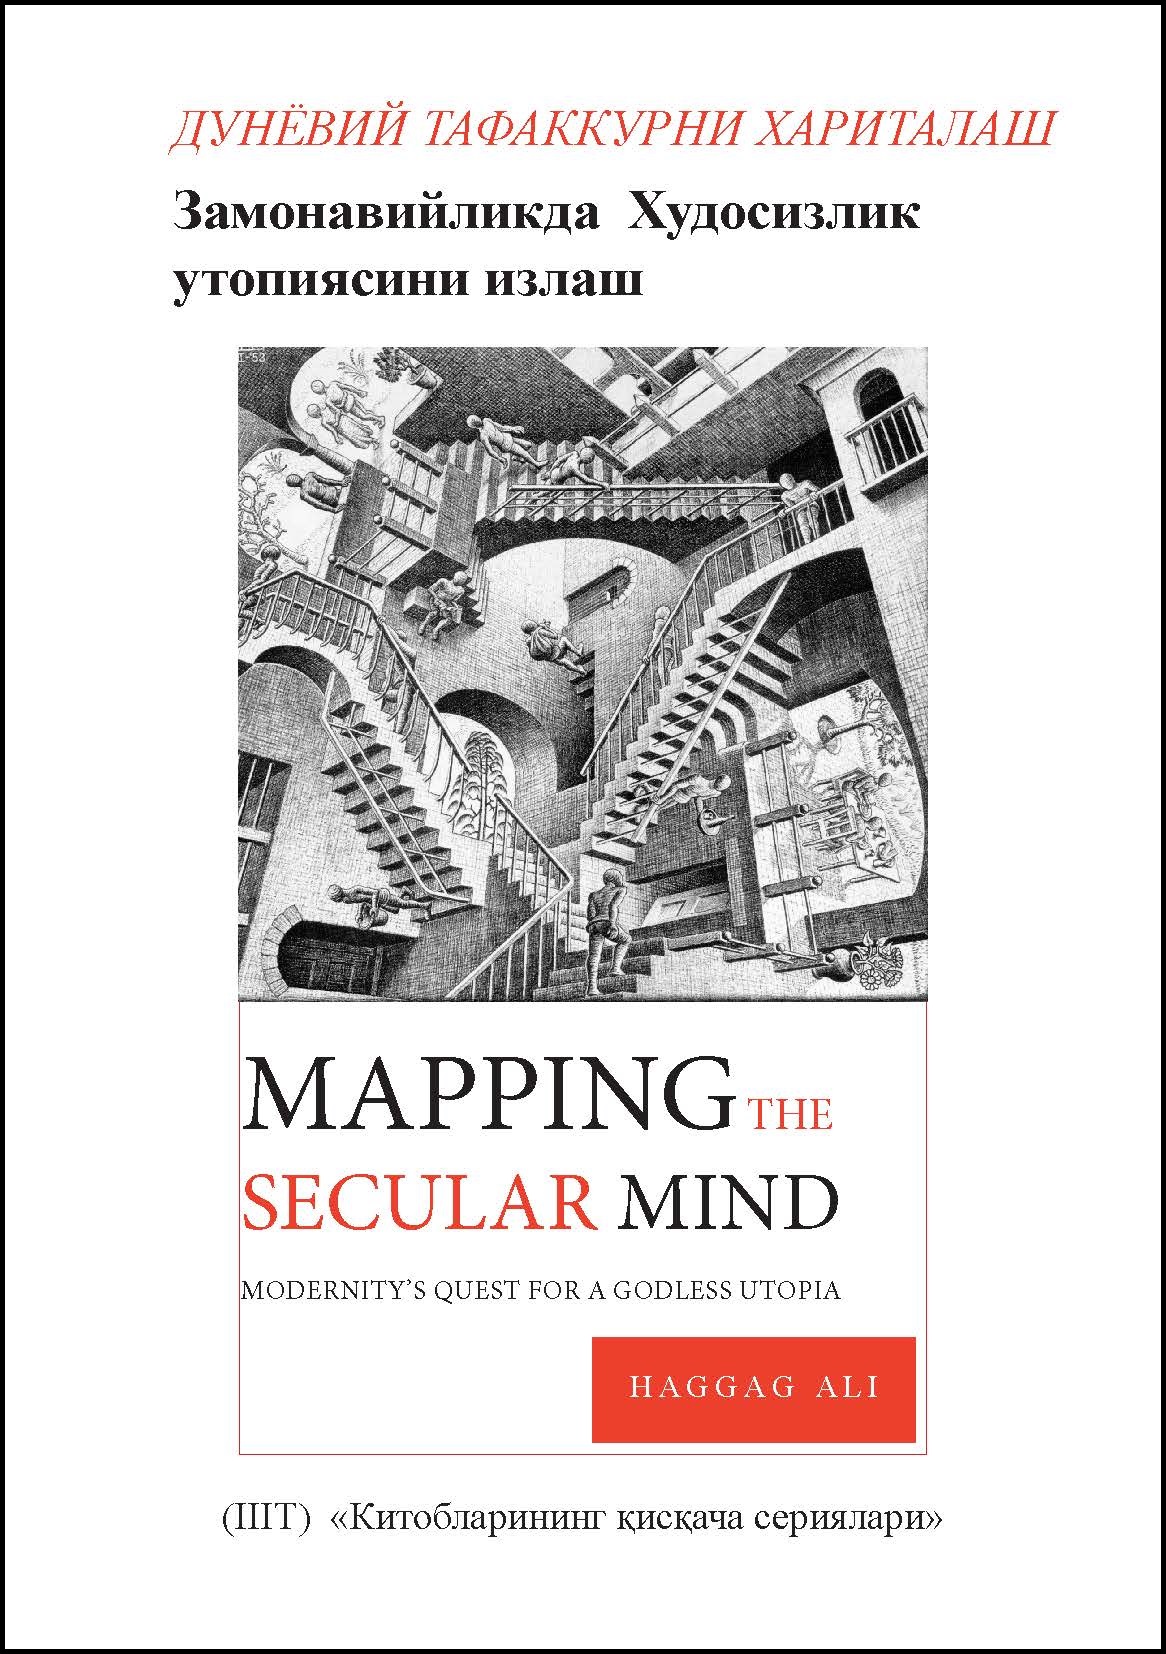 Uzbek: Китобларининг қисқача сериялари: Дунёвий тафаккурни хариталаш Замонавийликда худосизликутопиясини излаш (Book-in-Brief: Mapping the Secular Mind: Modernity’s Quest for A Godless Utopia)